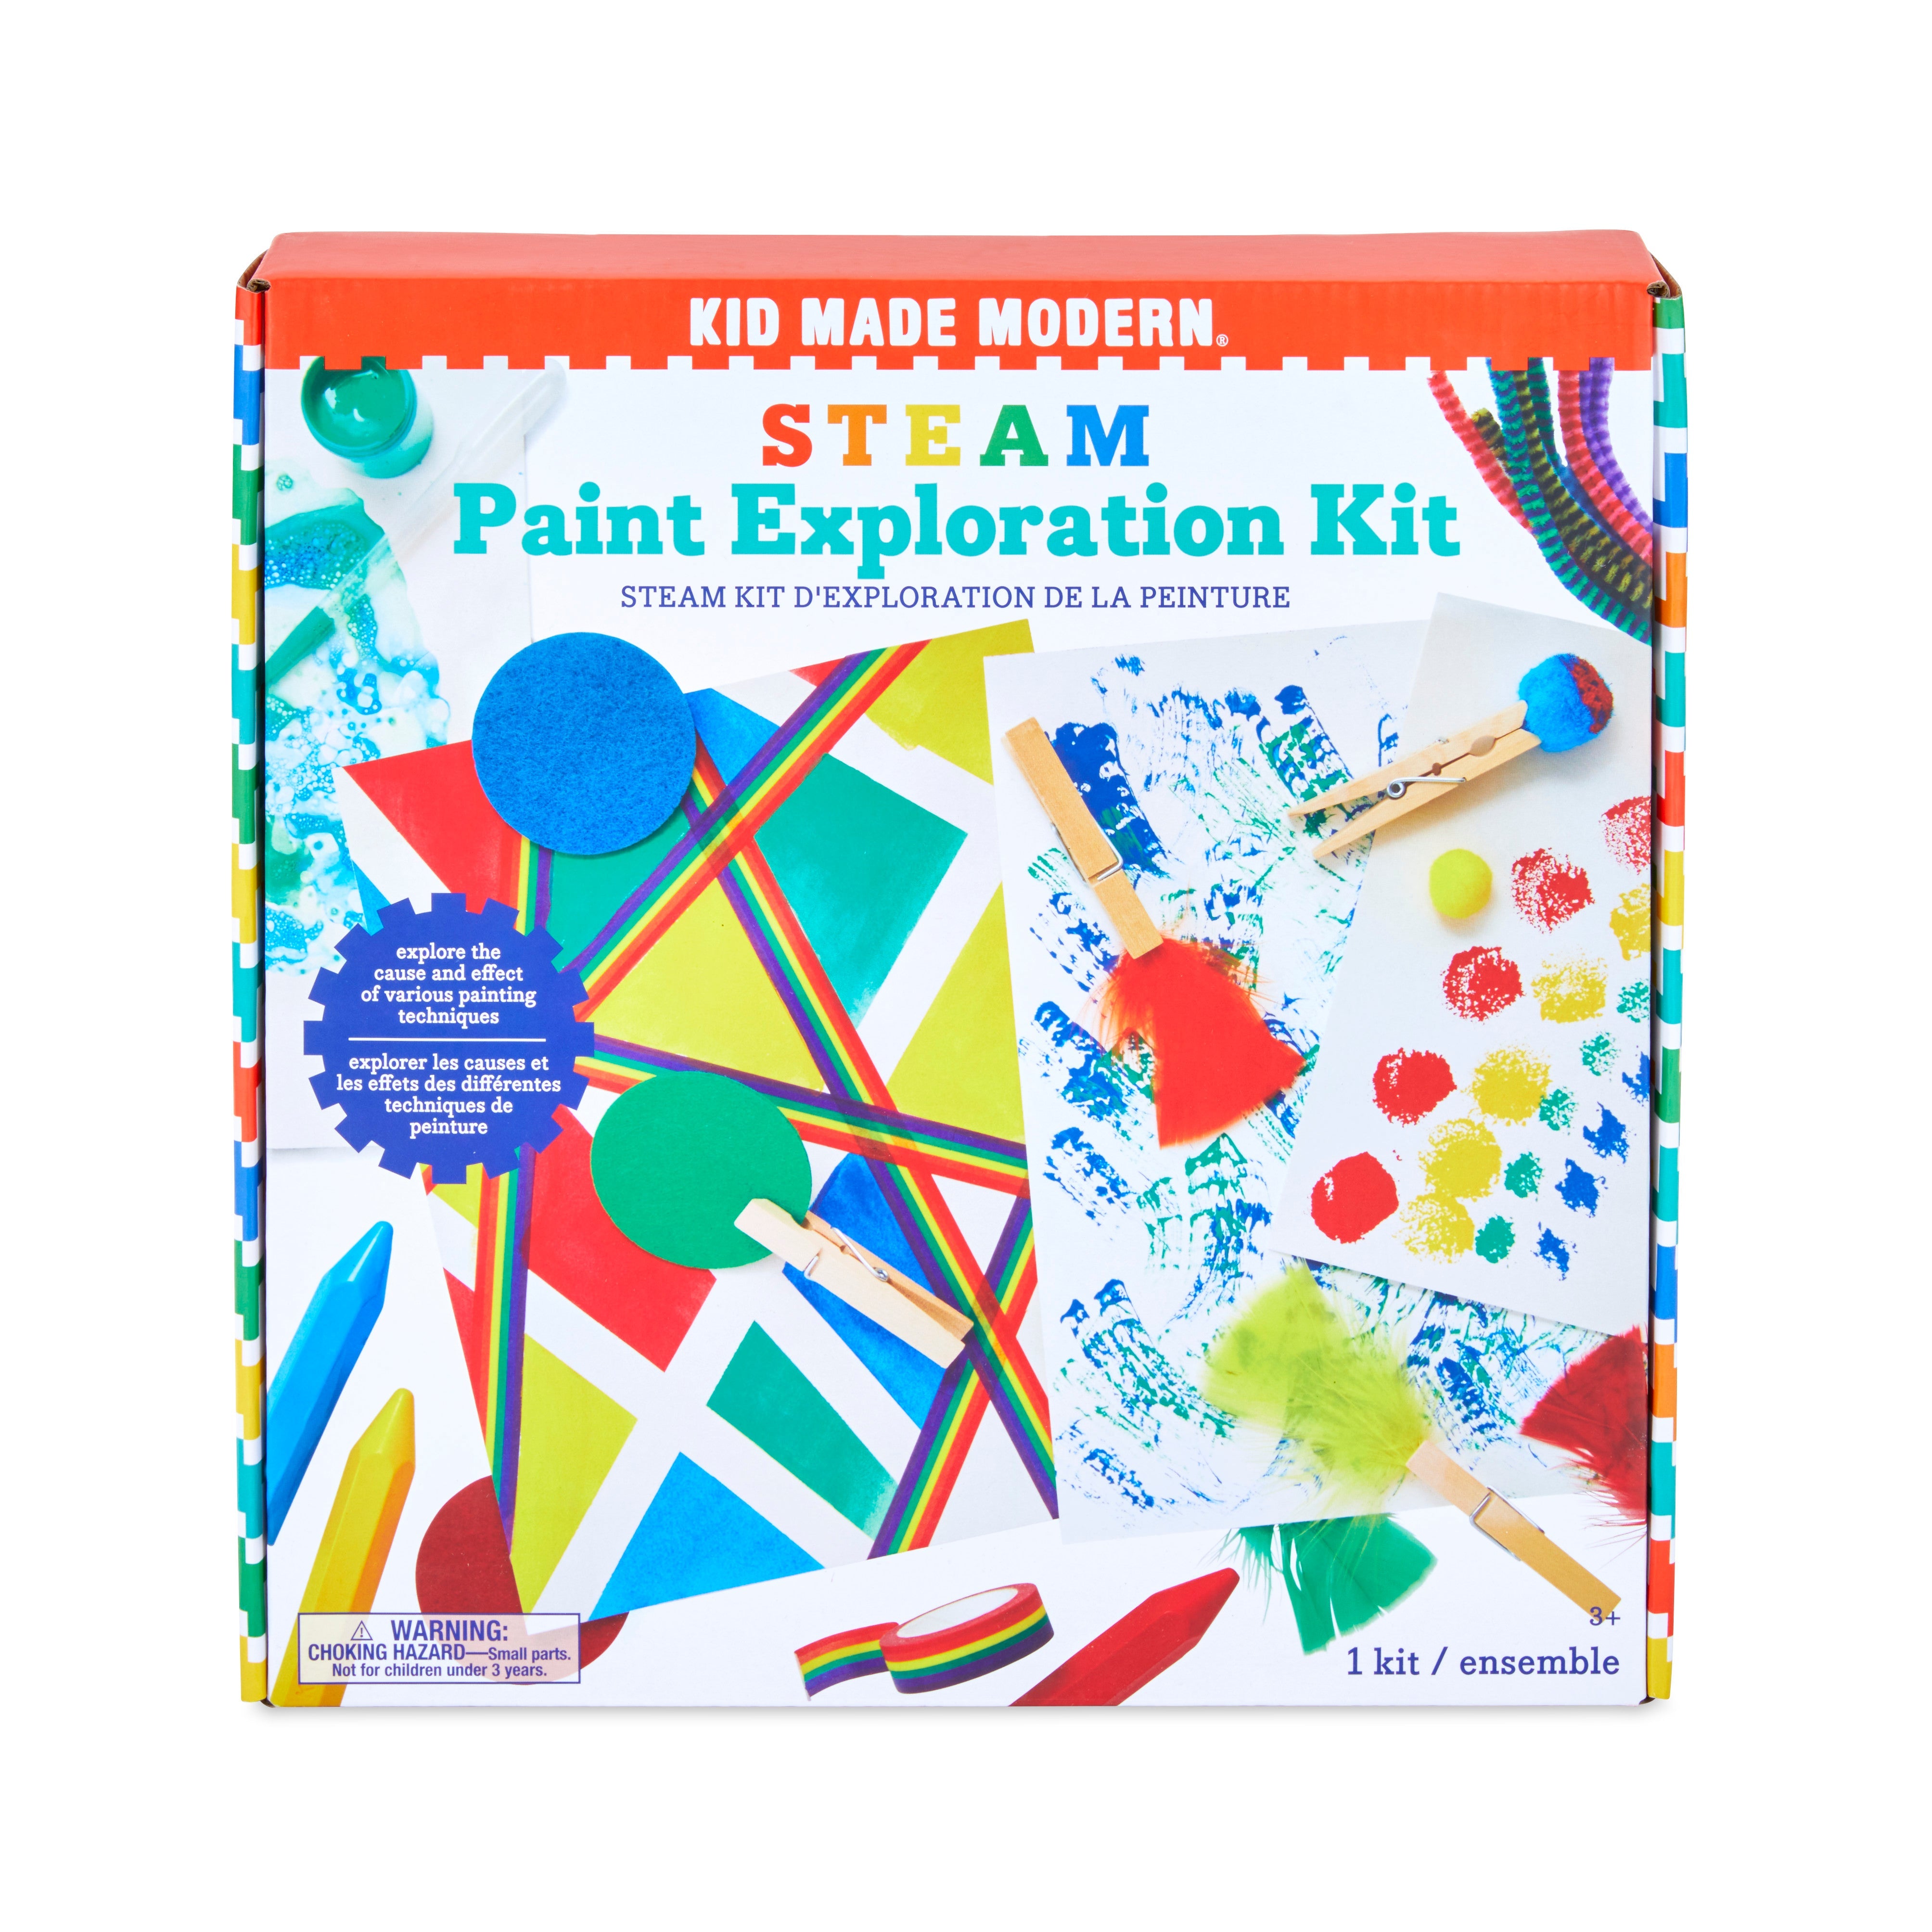 Kid Made Modern STEAM - Paint Exploration Kit Crafts